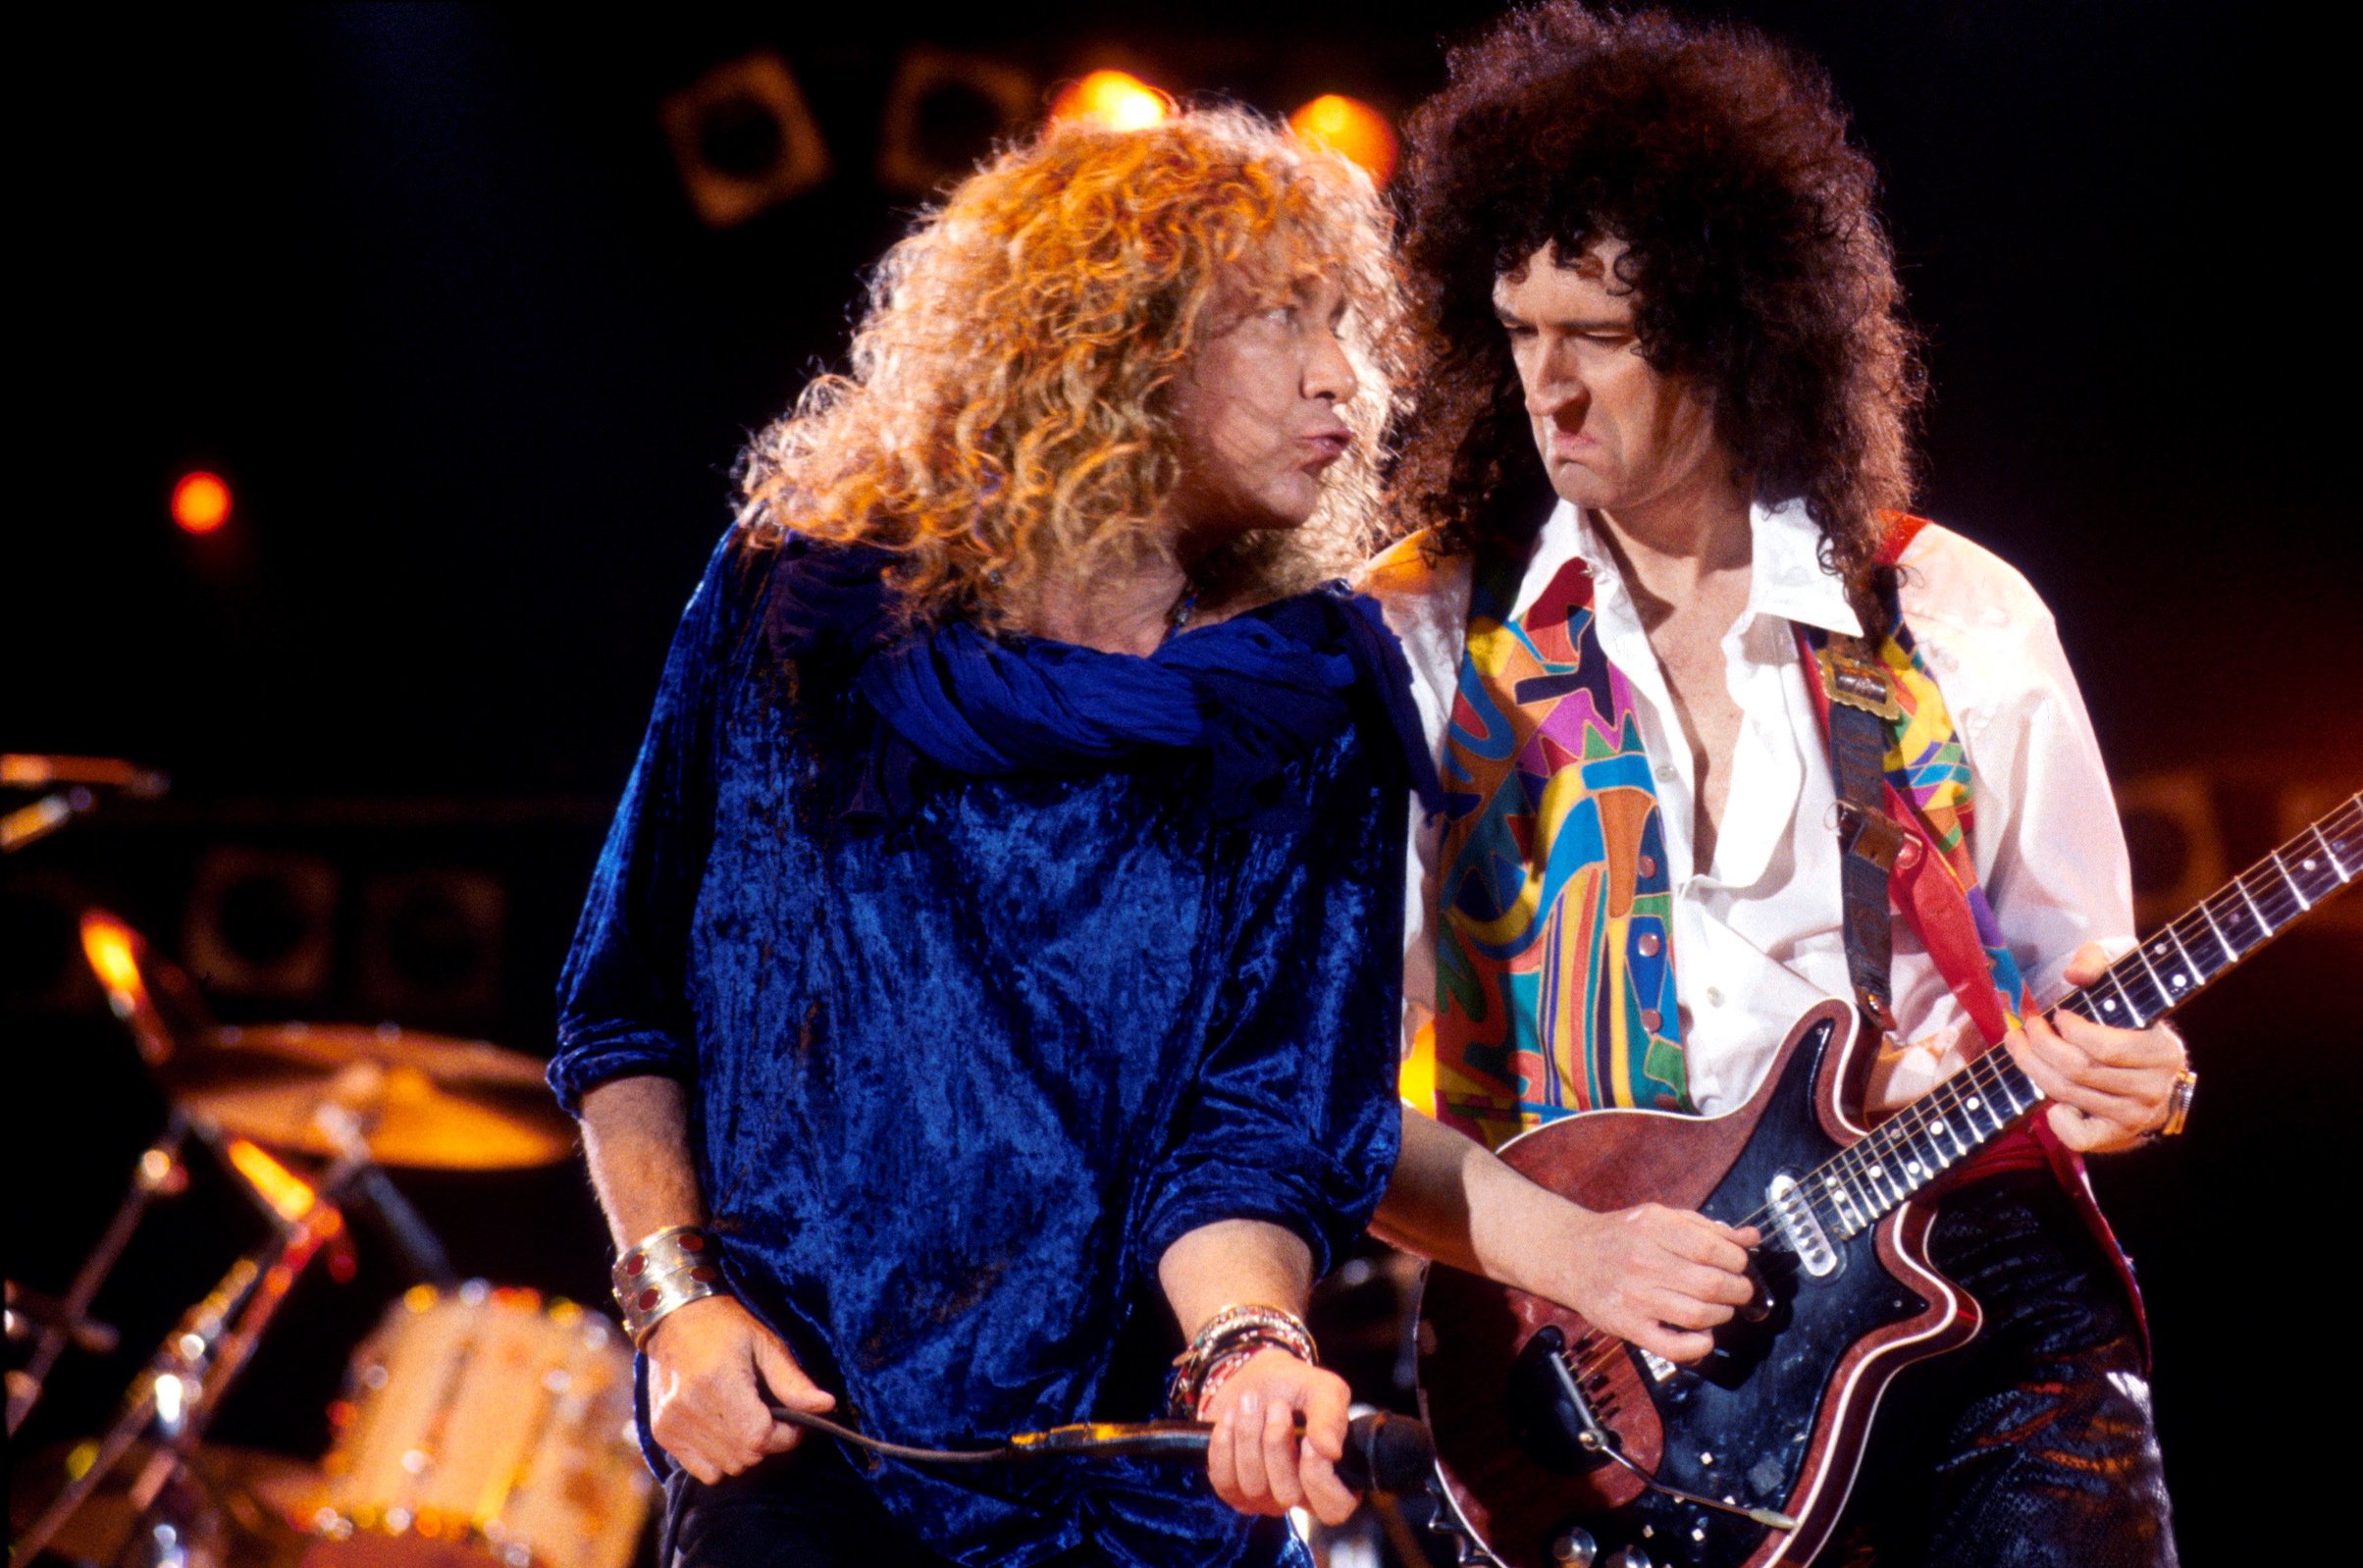 Концерт памяти фредди. Джимми пейдж и Брайан Мэй. Брайан Мэй на концерте Queen. Брайан Мэй Freddie Mercury Tribute Concert. Freddie Mercury Tribute Concert 1992.